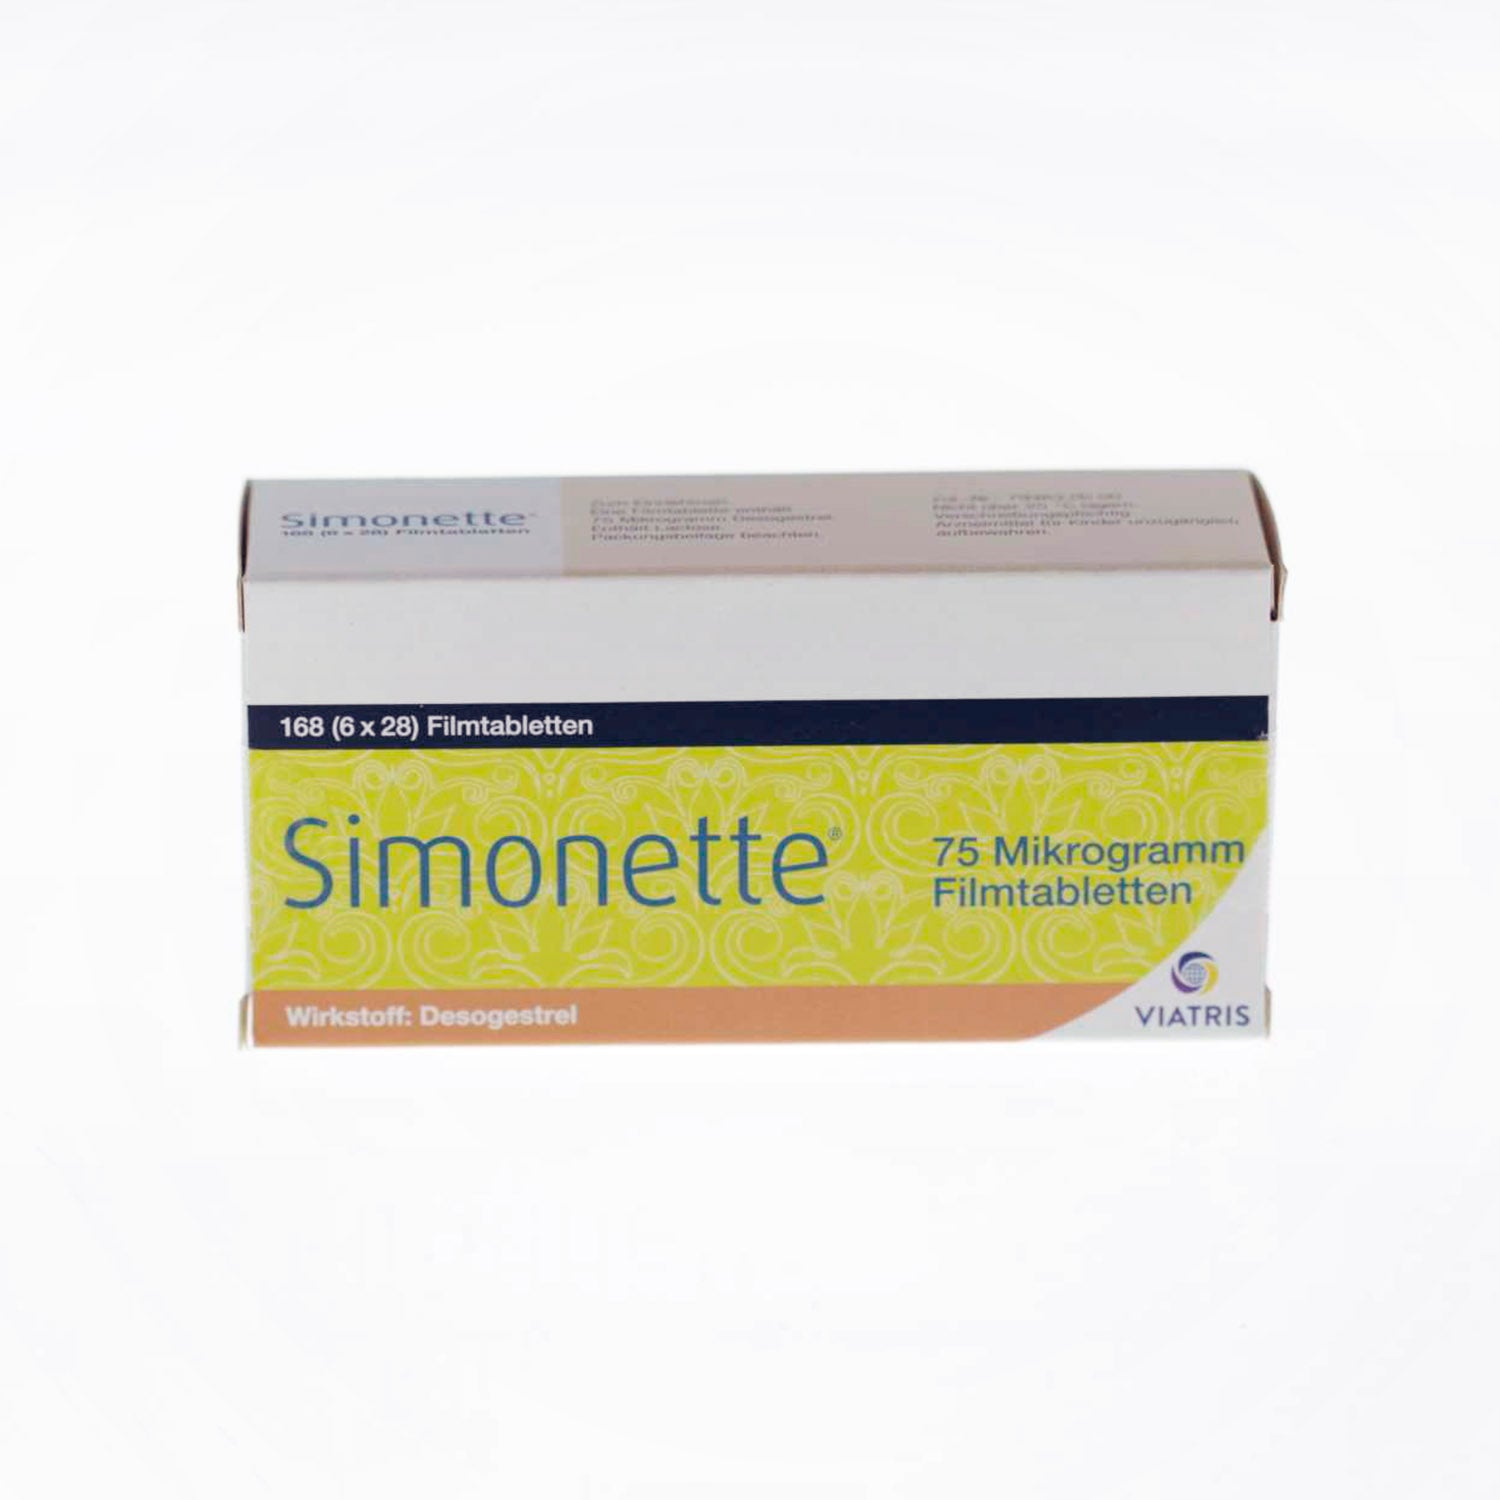 Simonette 75 Mikrogramm